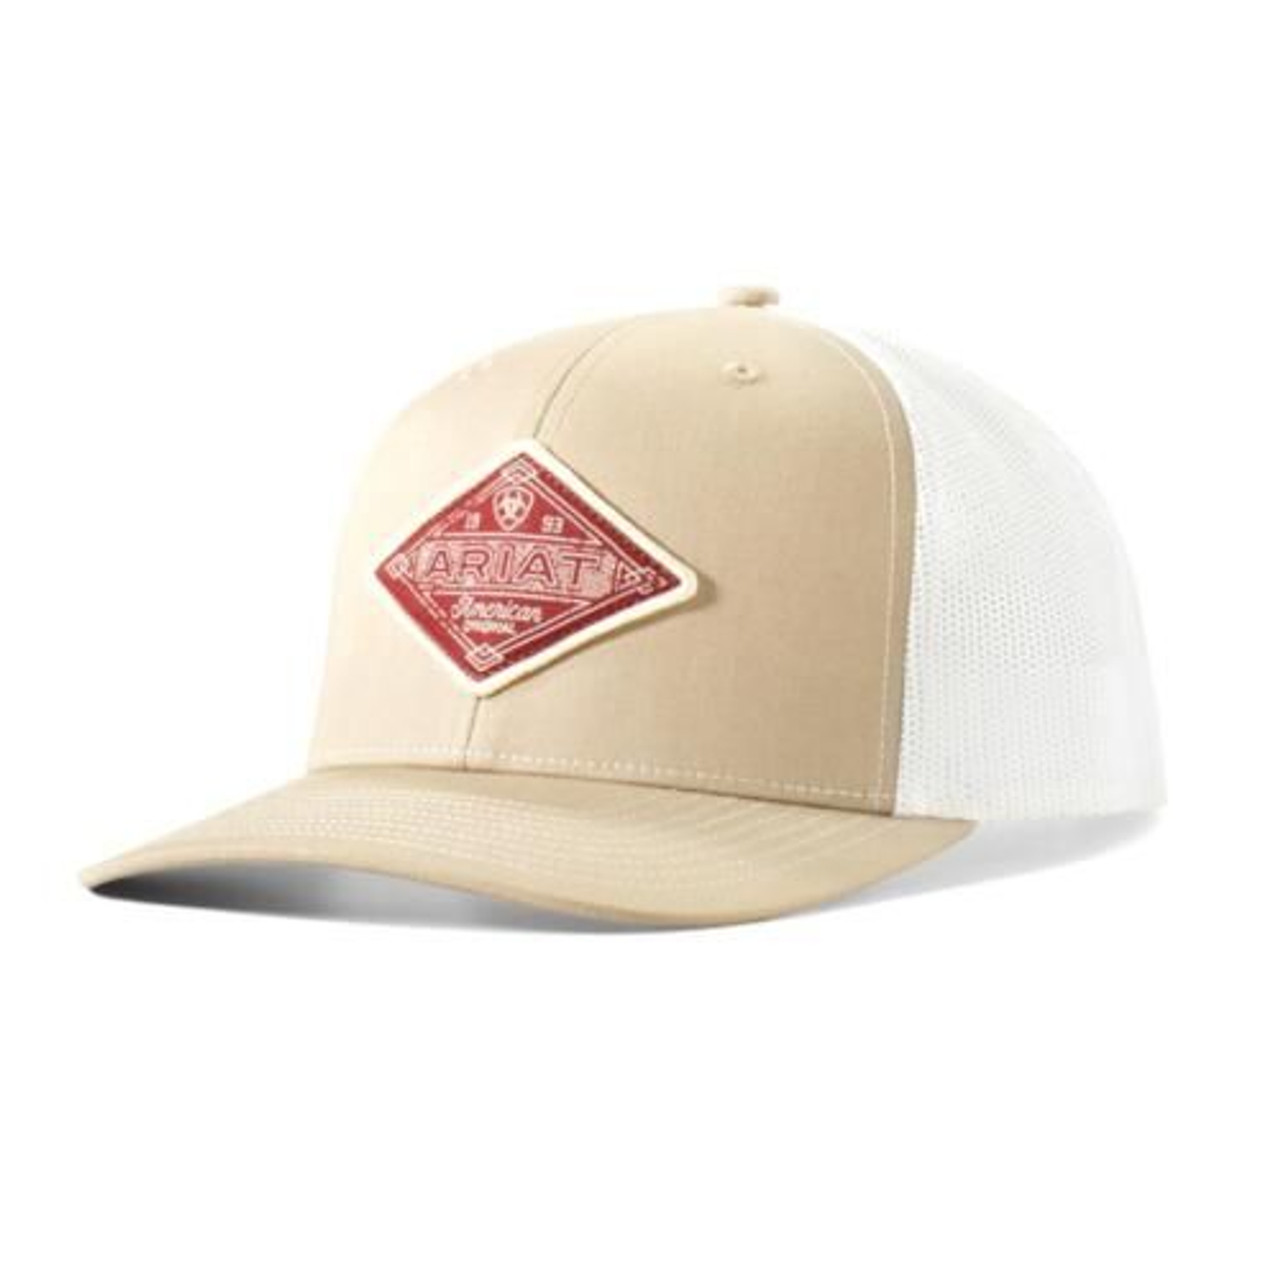 Ariat Men's Diamond Patch Baseball Cap - Cream